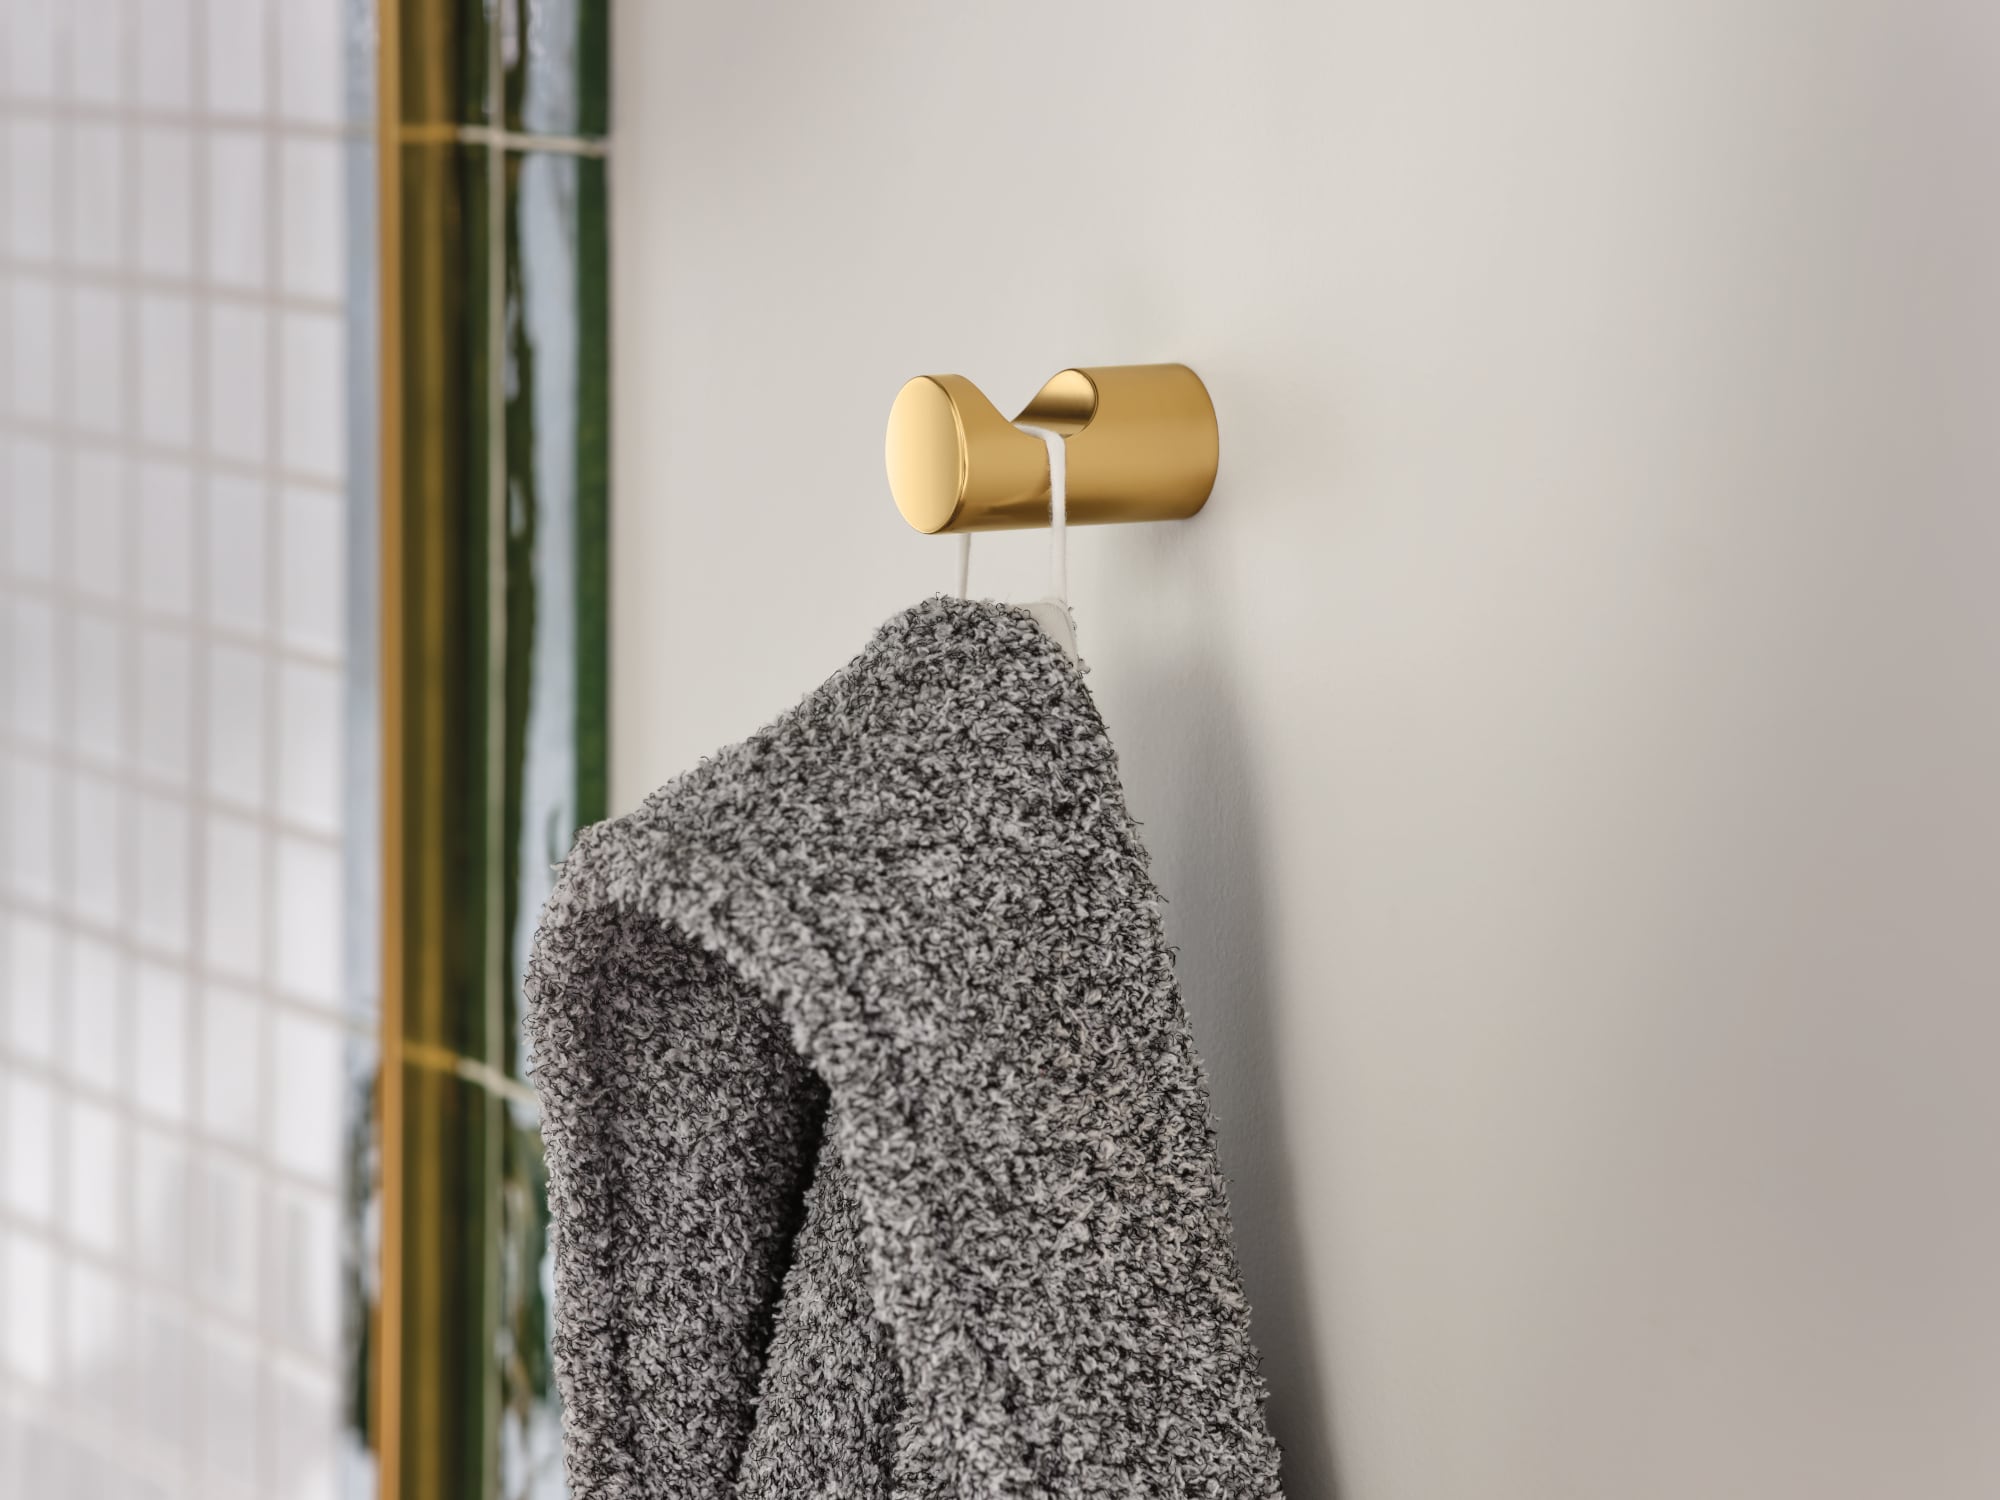 allen + roth Harlow Gold Single-Hook Wall Mount Towel Hook in the